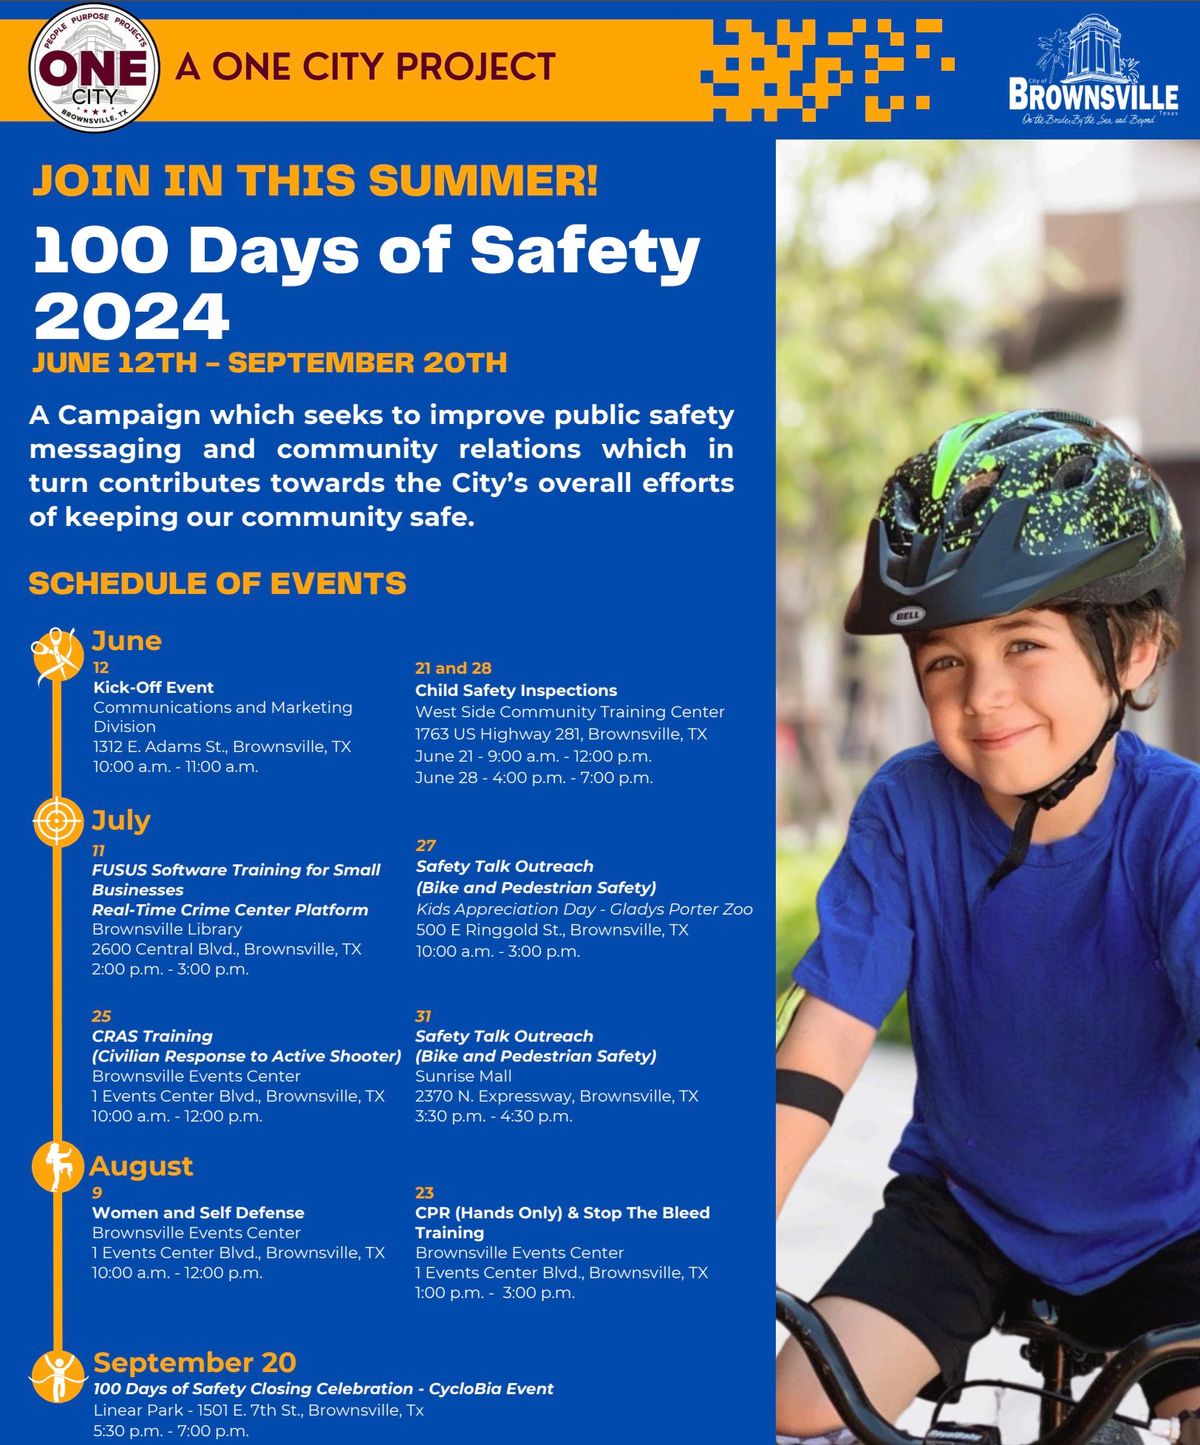 100 Days of Safety: CRAS Training